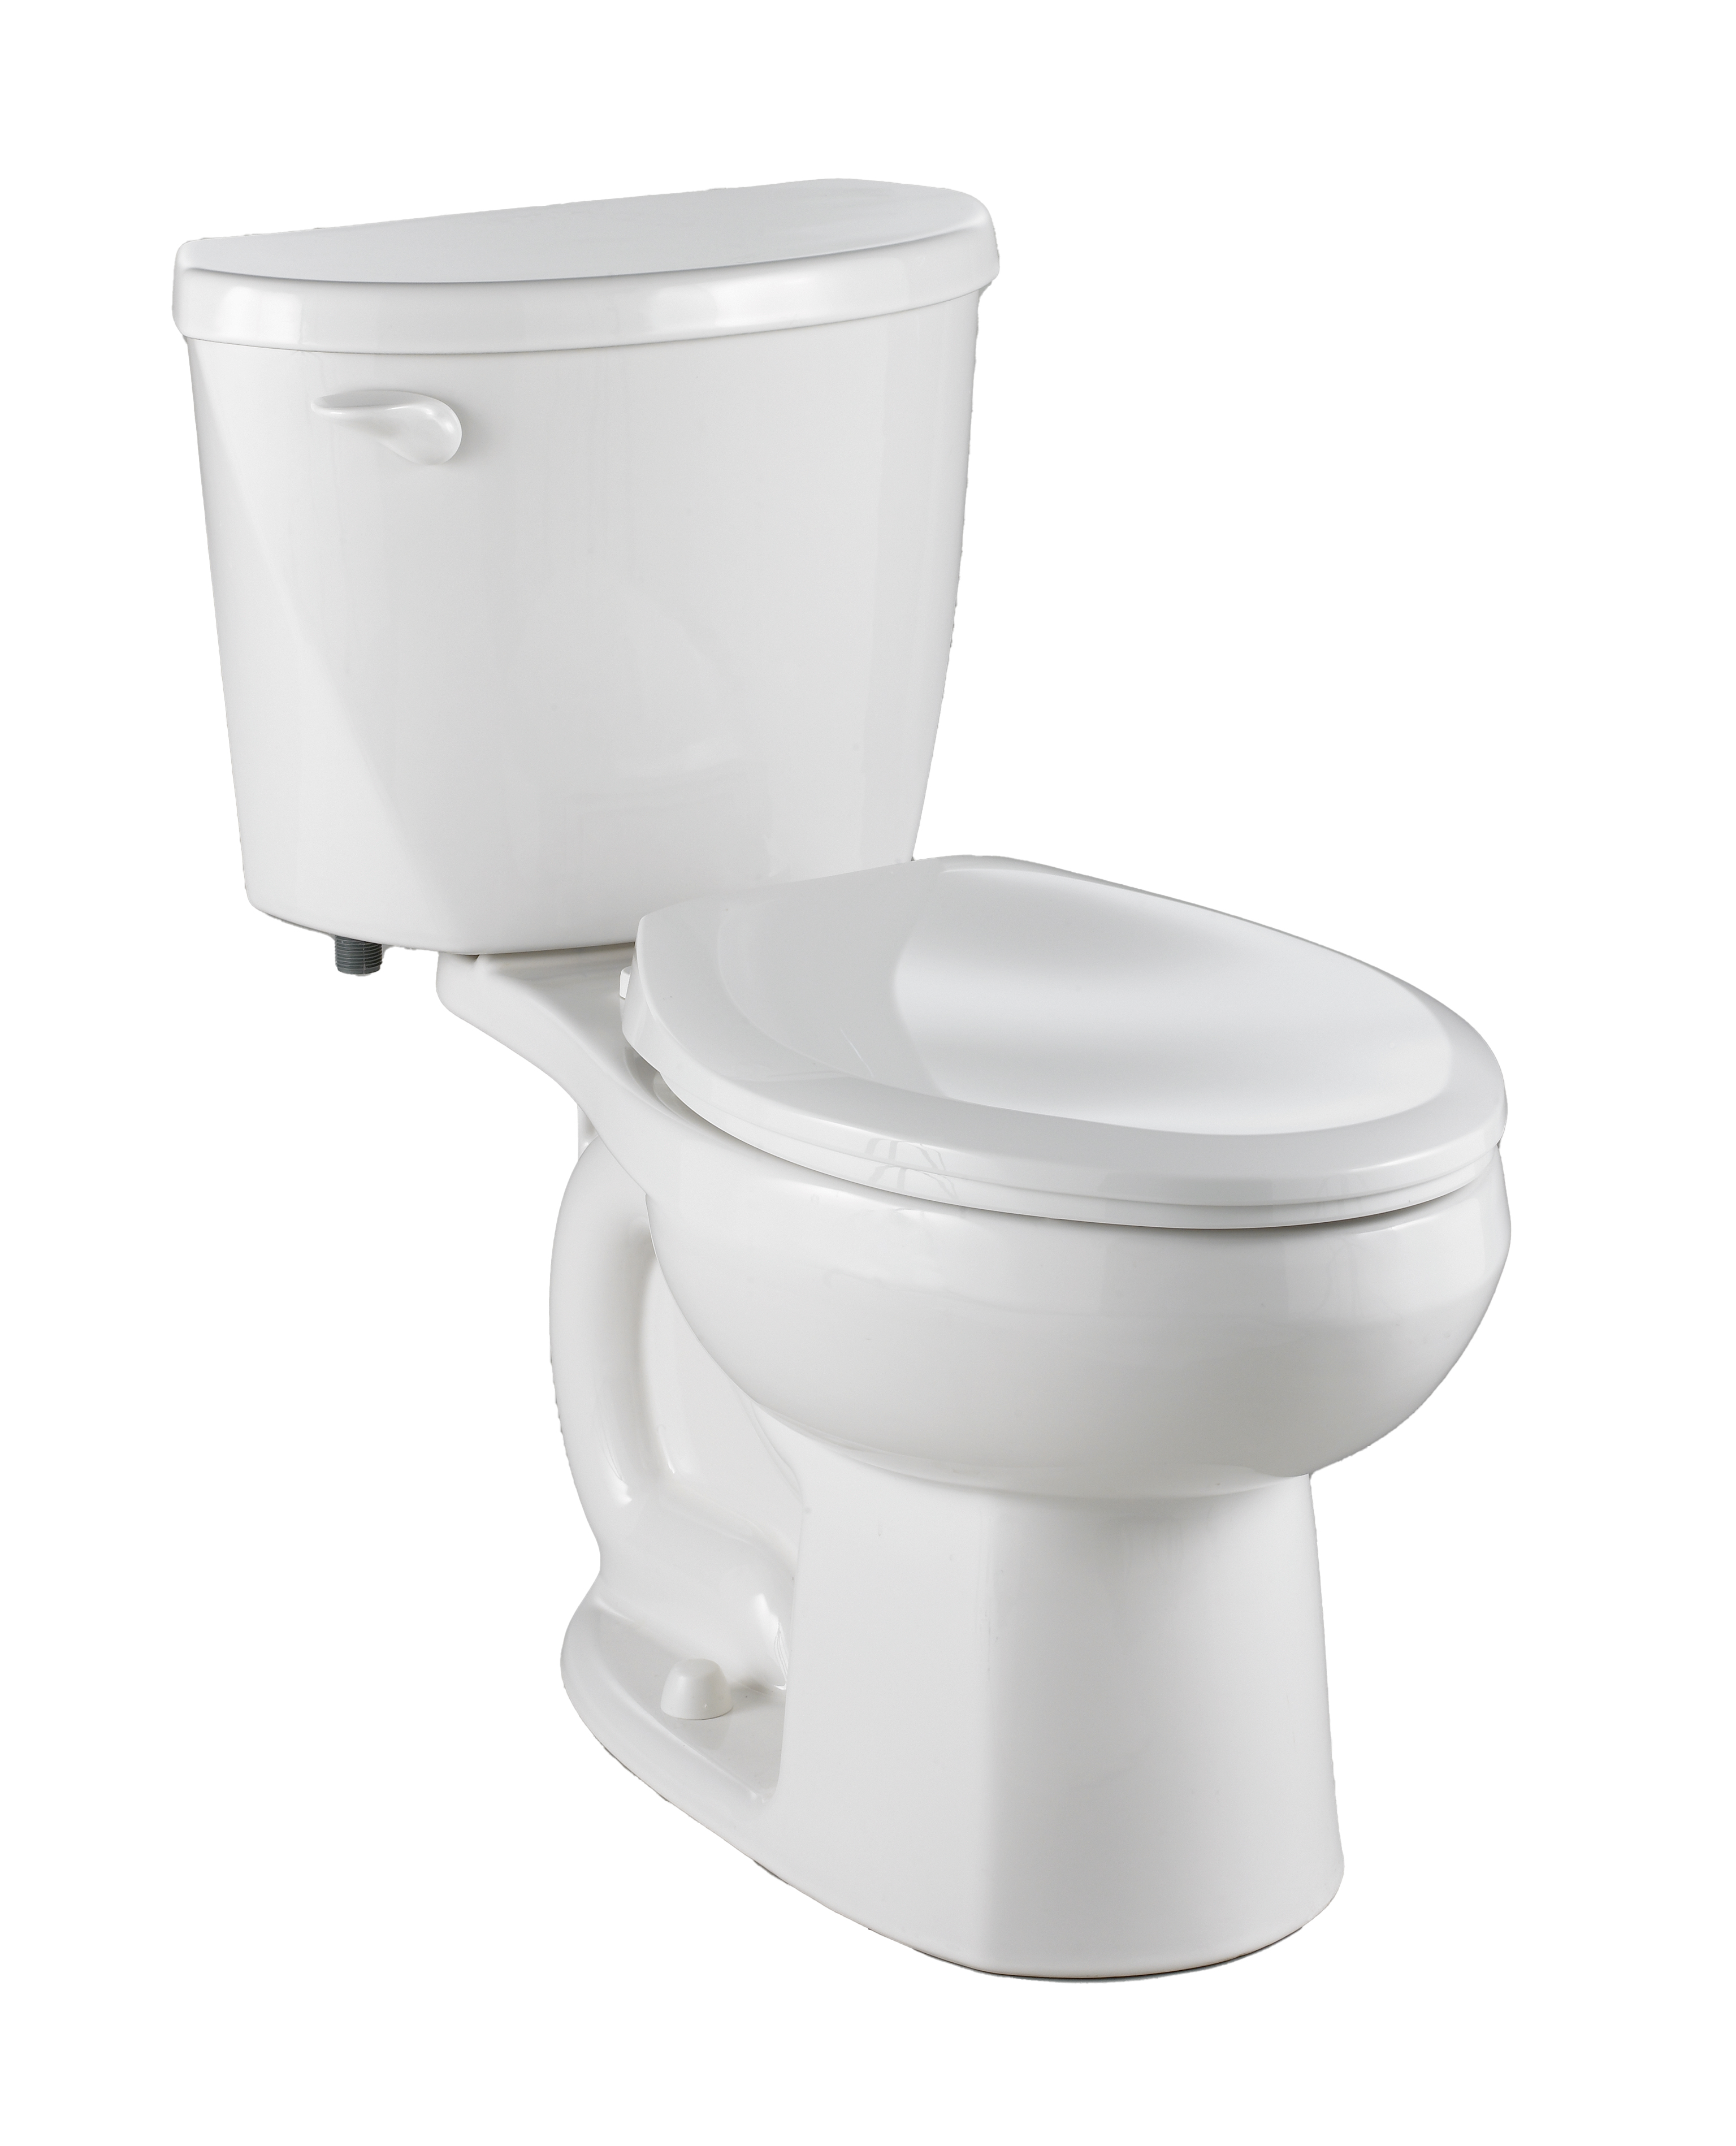 Evolution 2 Two-Piece 1.28 gpf/4.8 Lpf Standard Height Elongated Toilet Less Seat